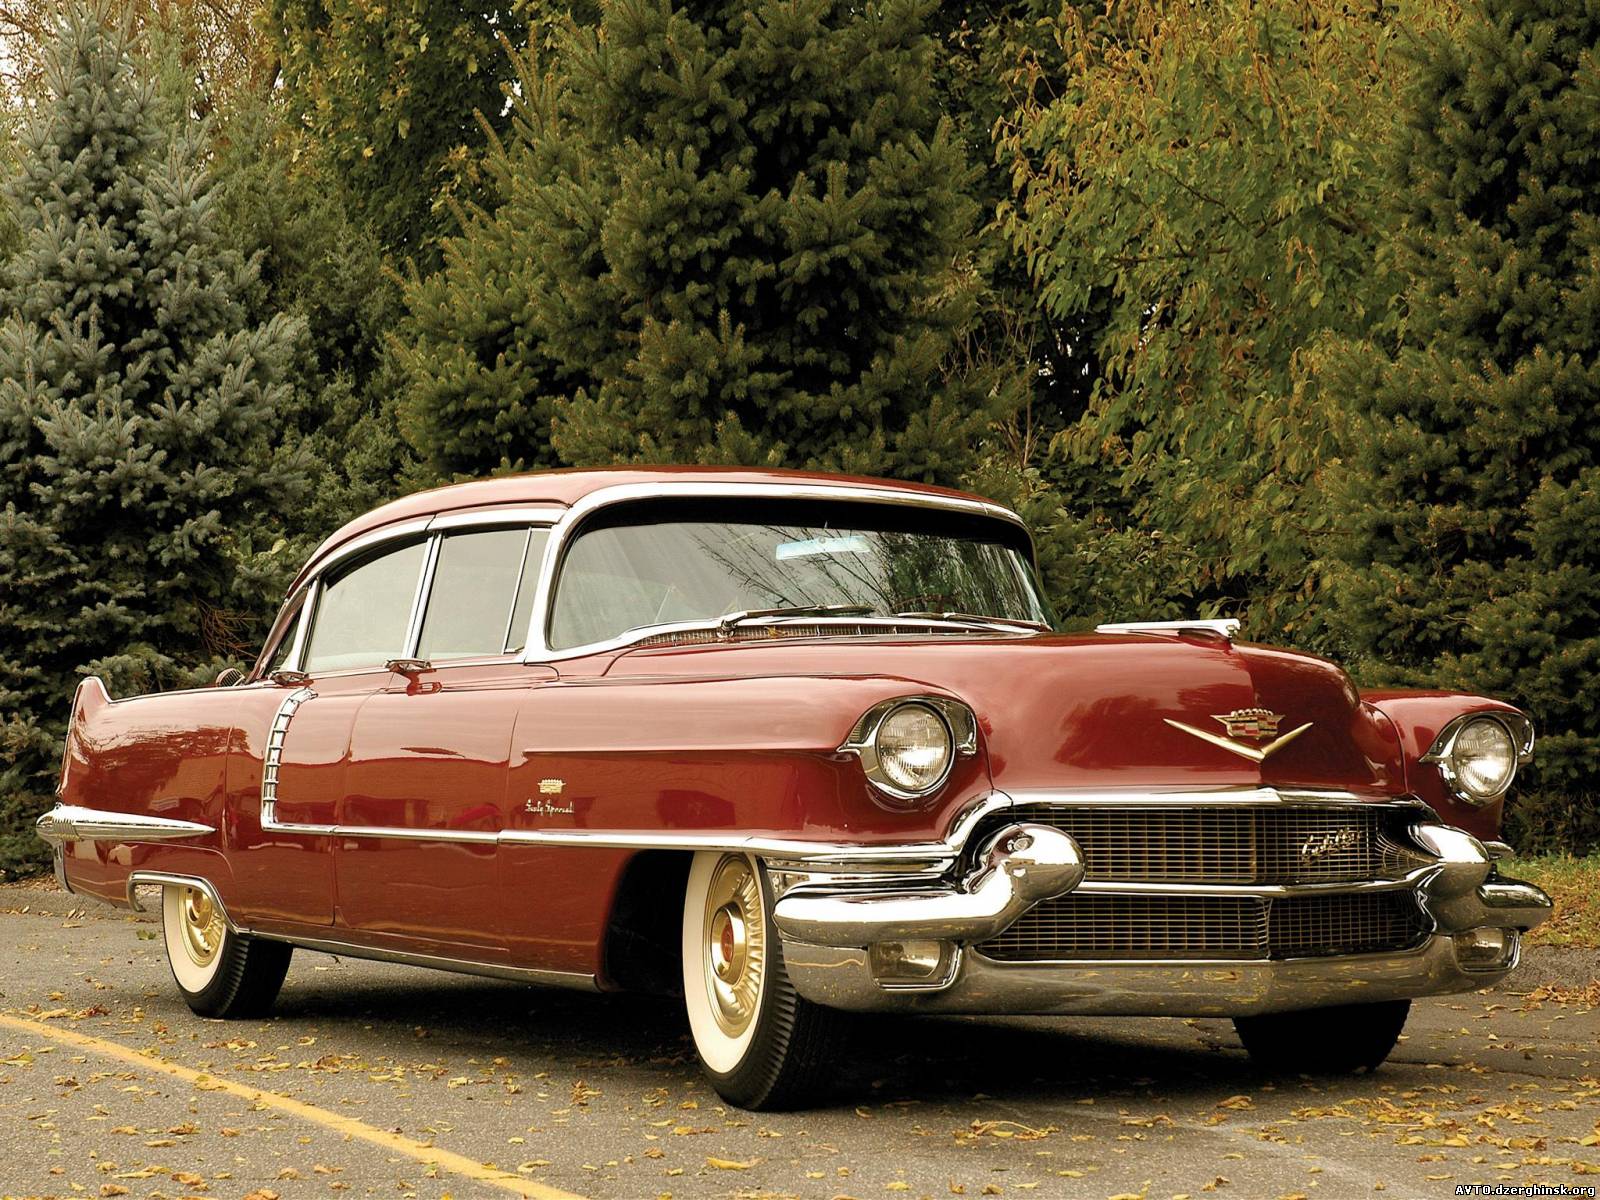 036. 1956  Cadillac Maharani Show Car